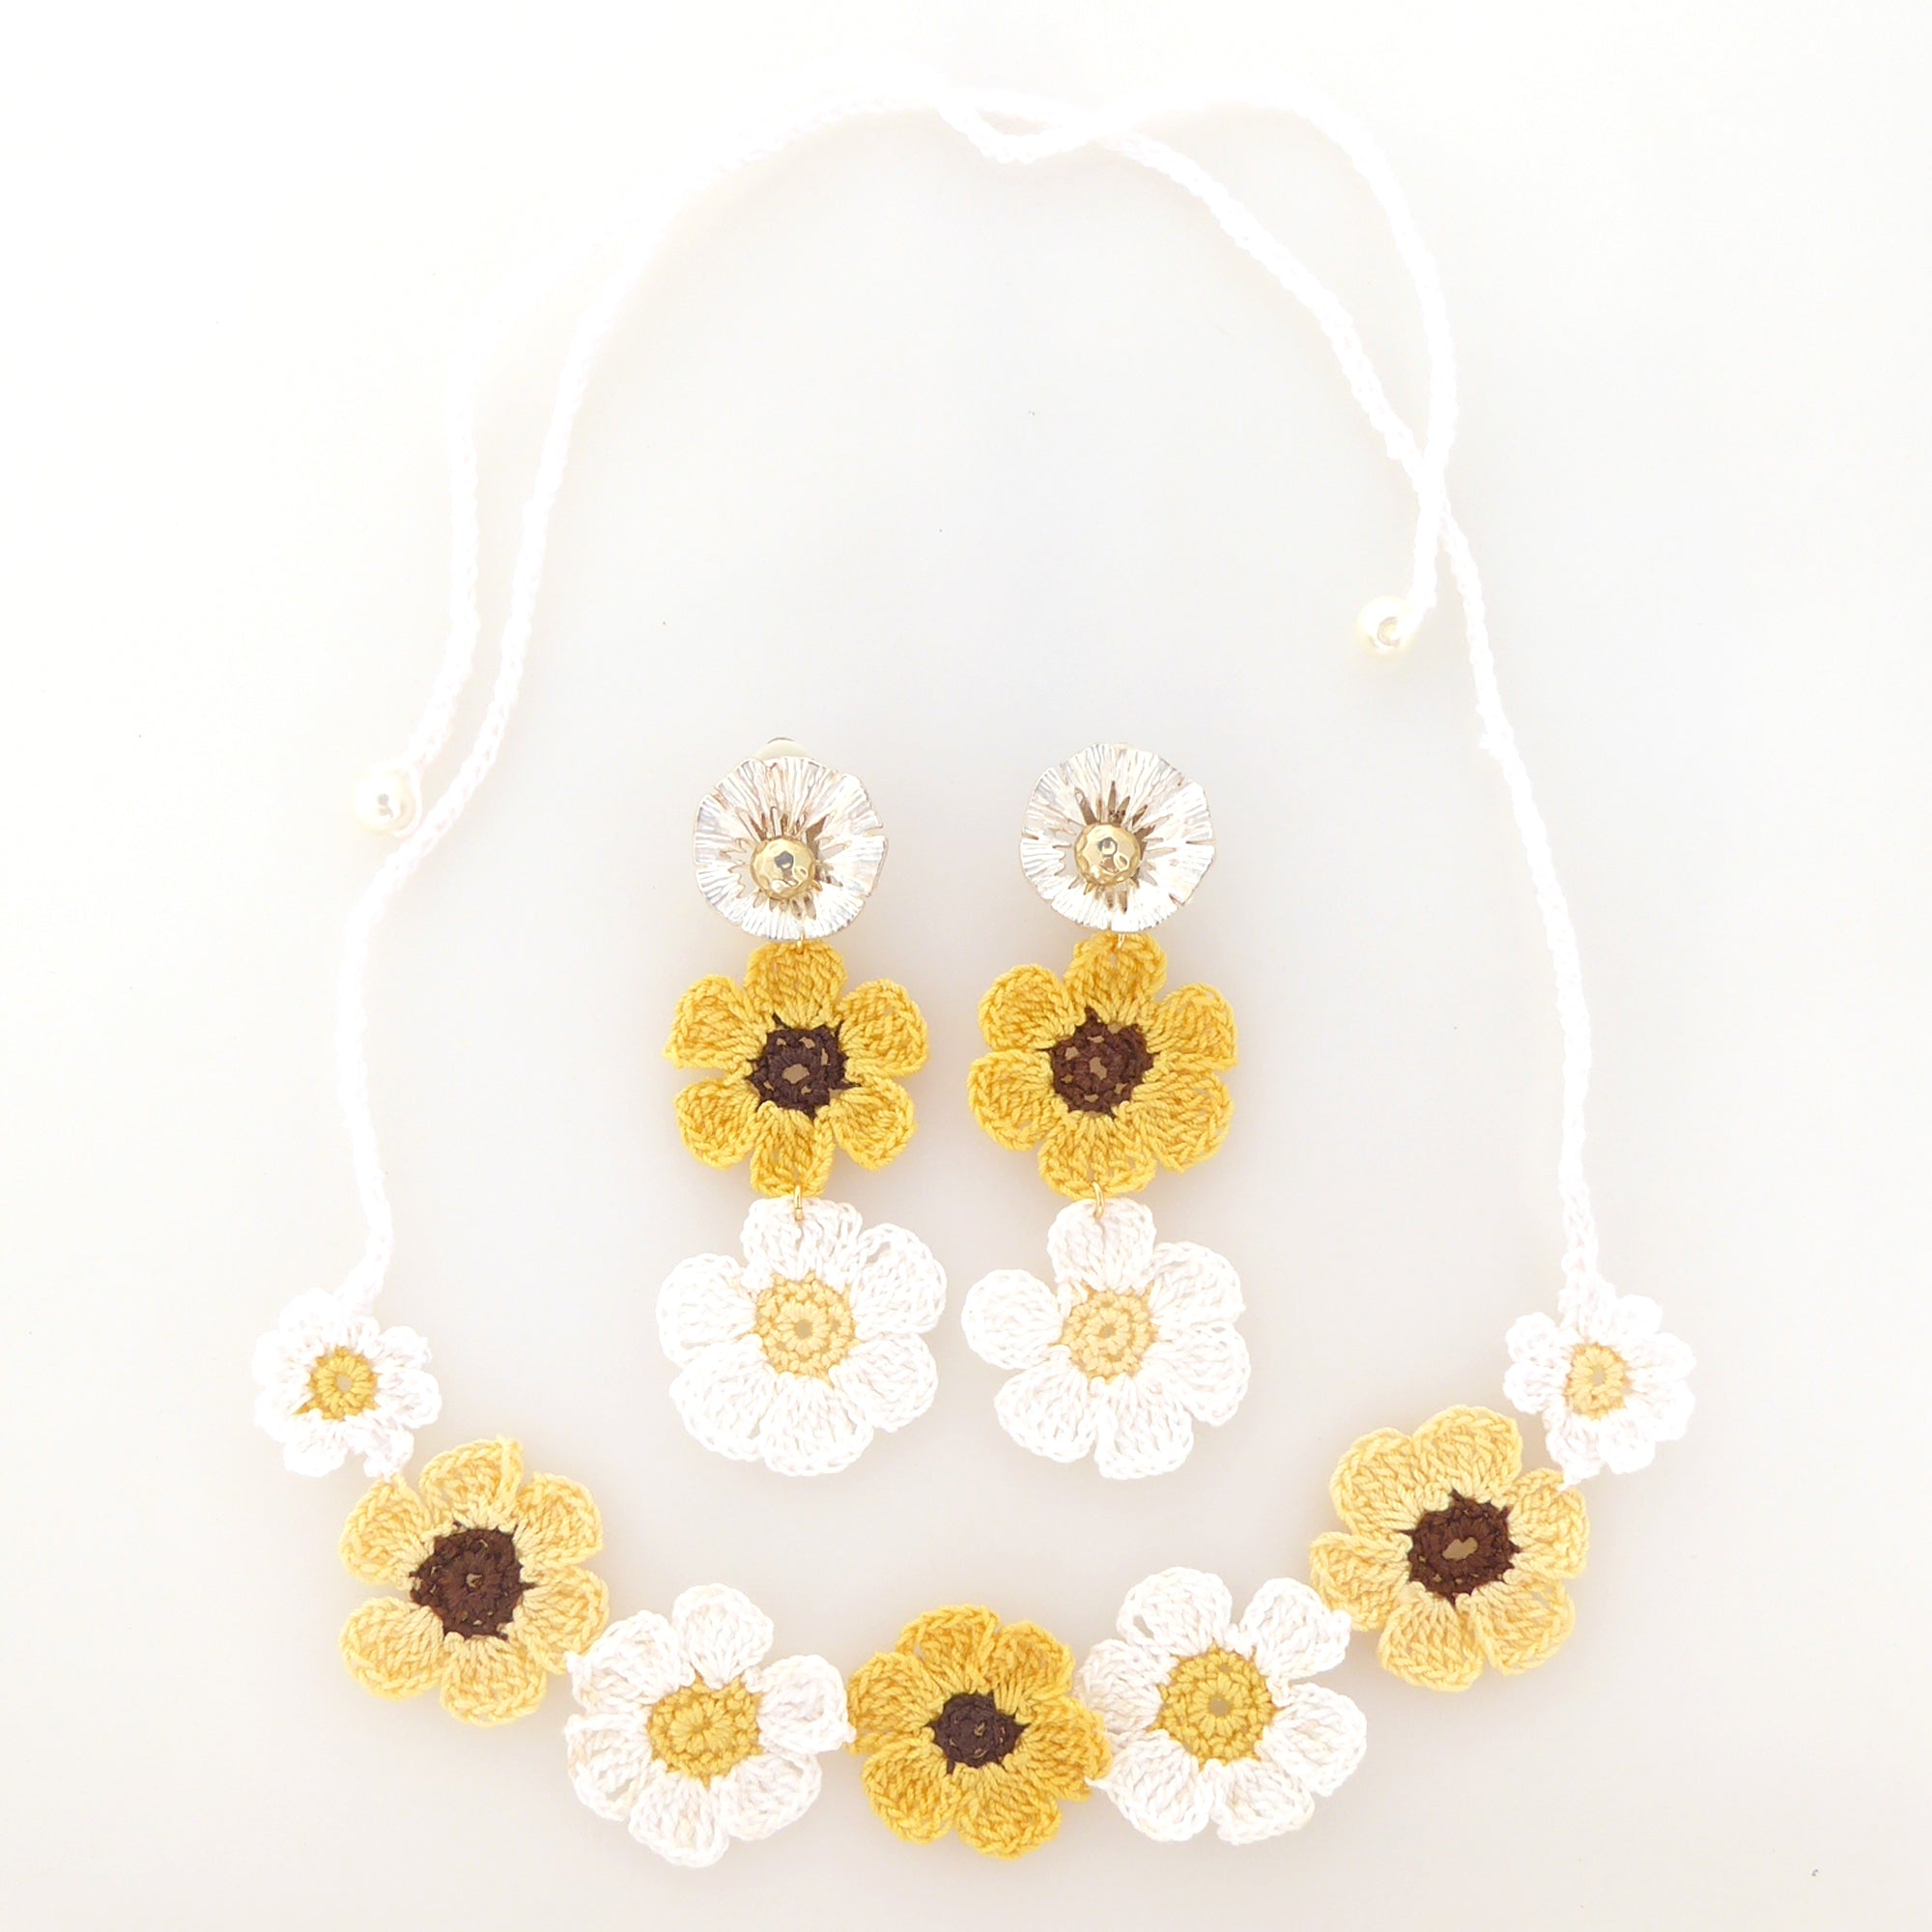 White and yellow daisy crochet jewelry set by Jenny Dayco 6